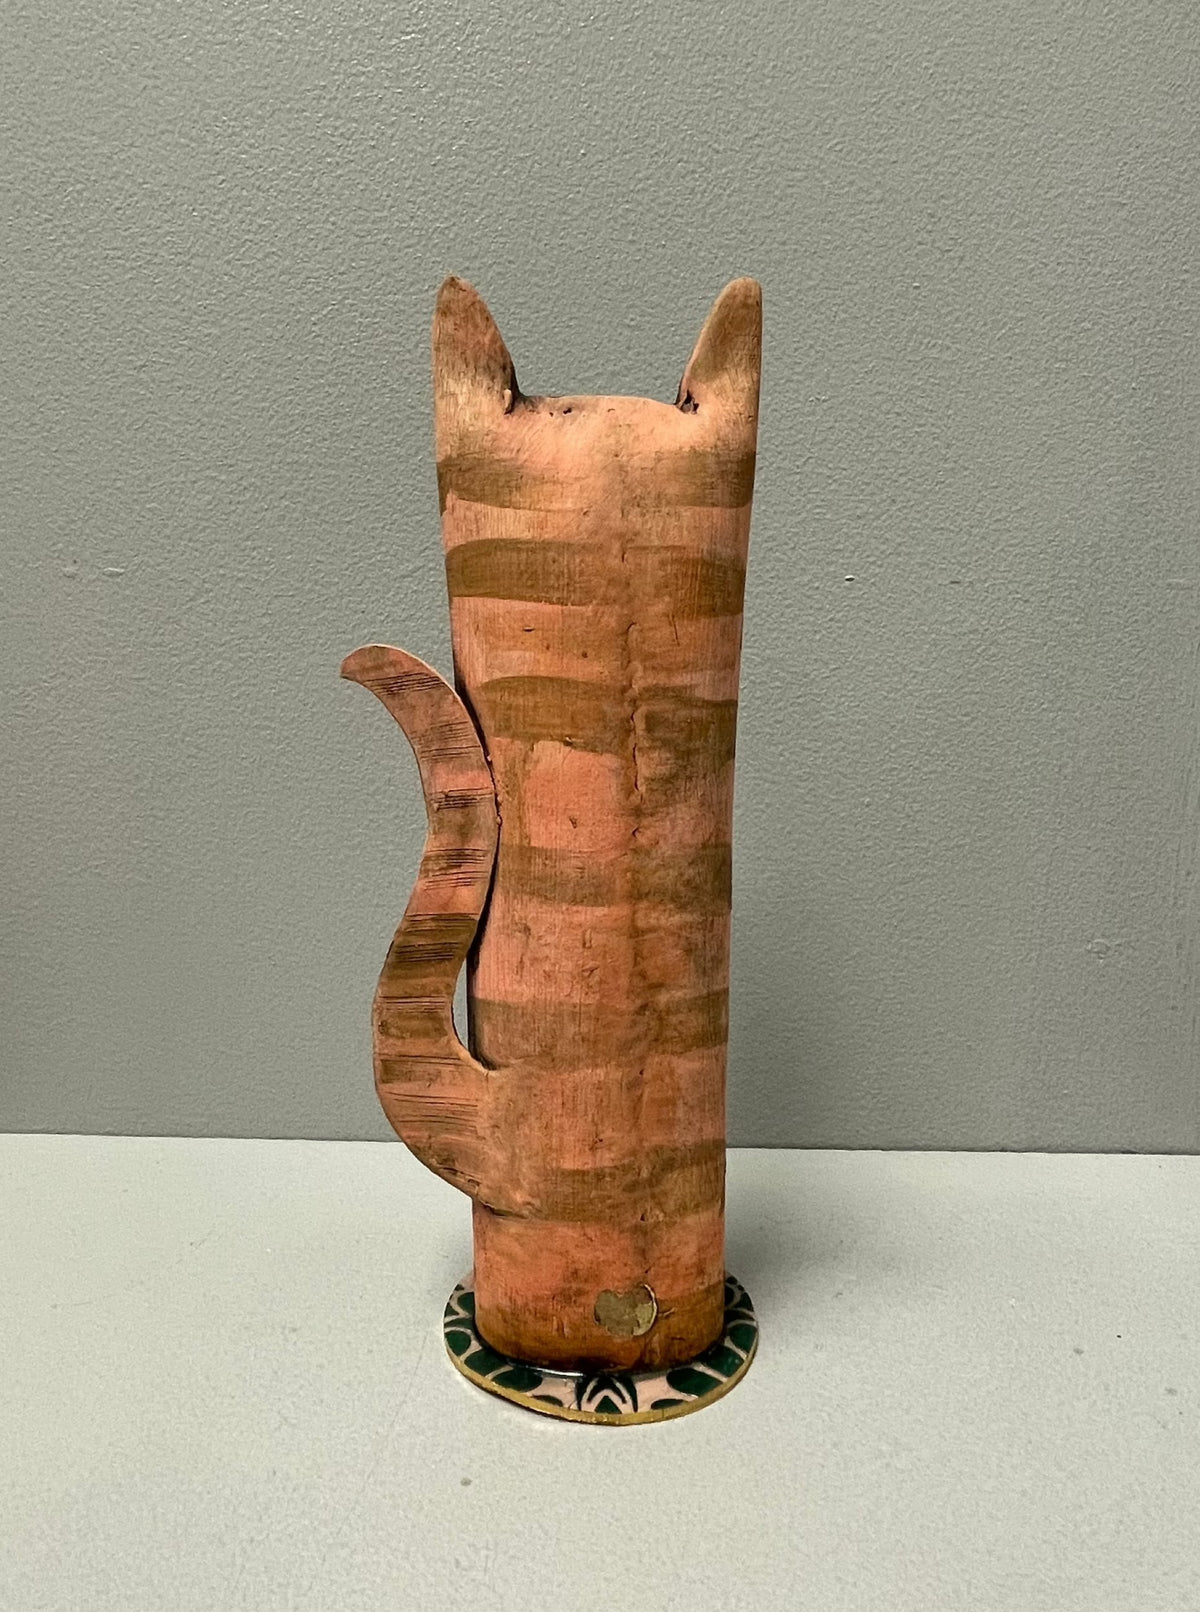 Large Cat - Ceramic Sculpture by Sarah Saunders